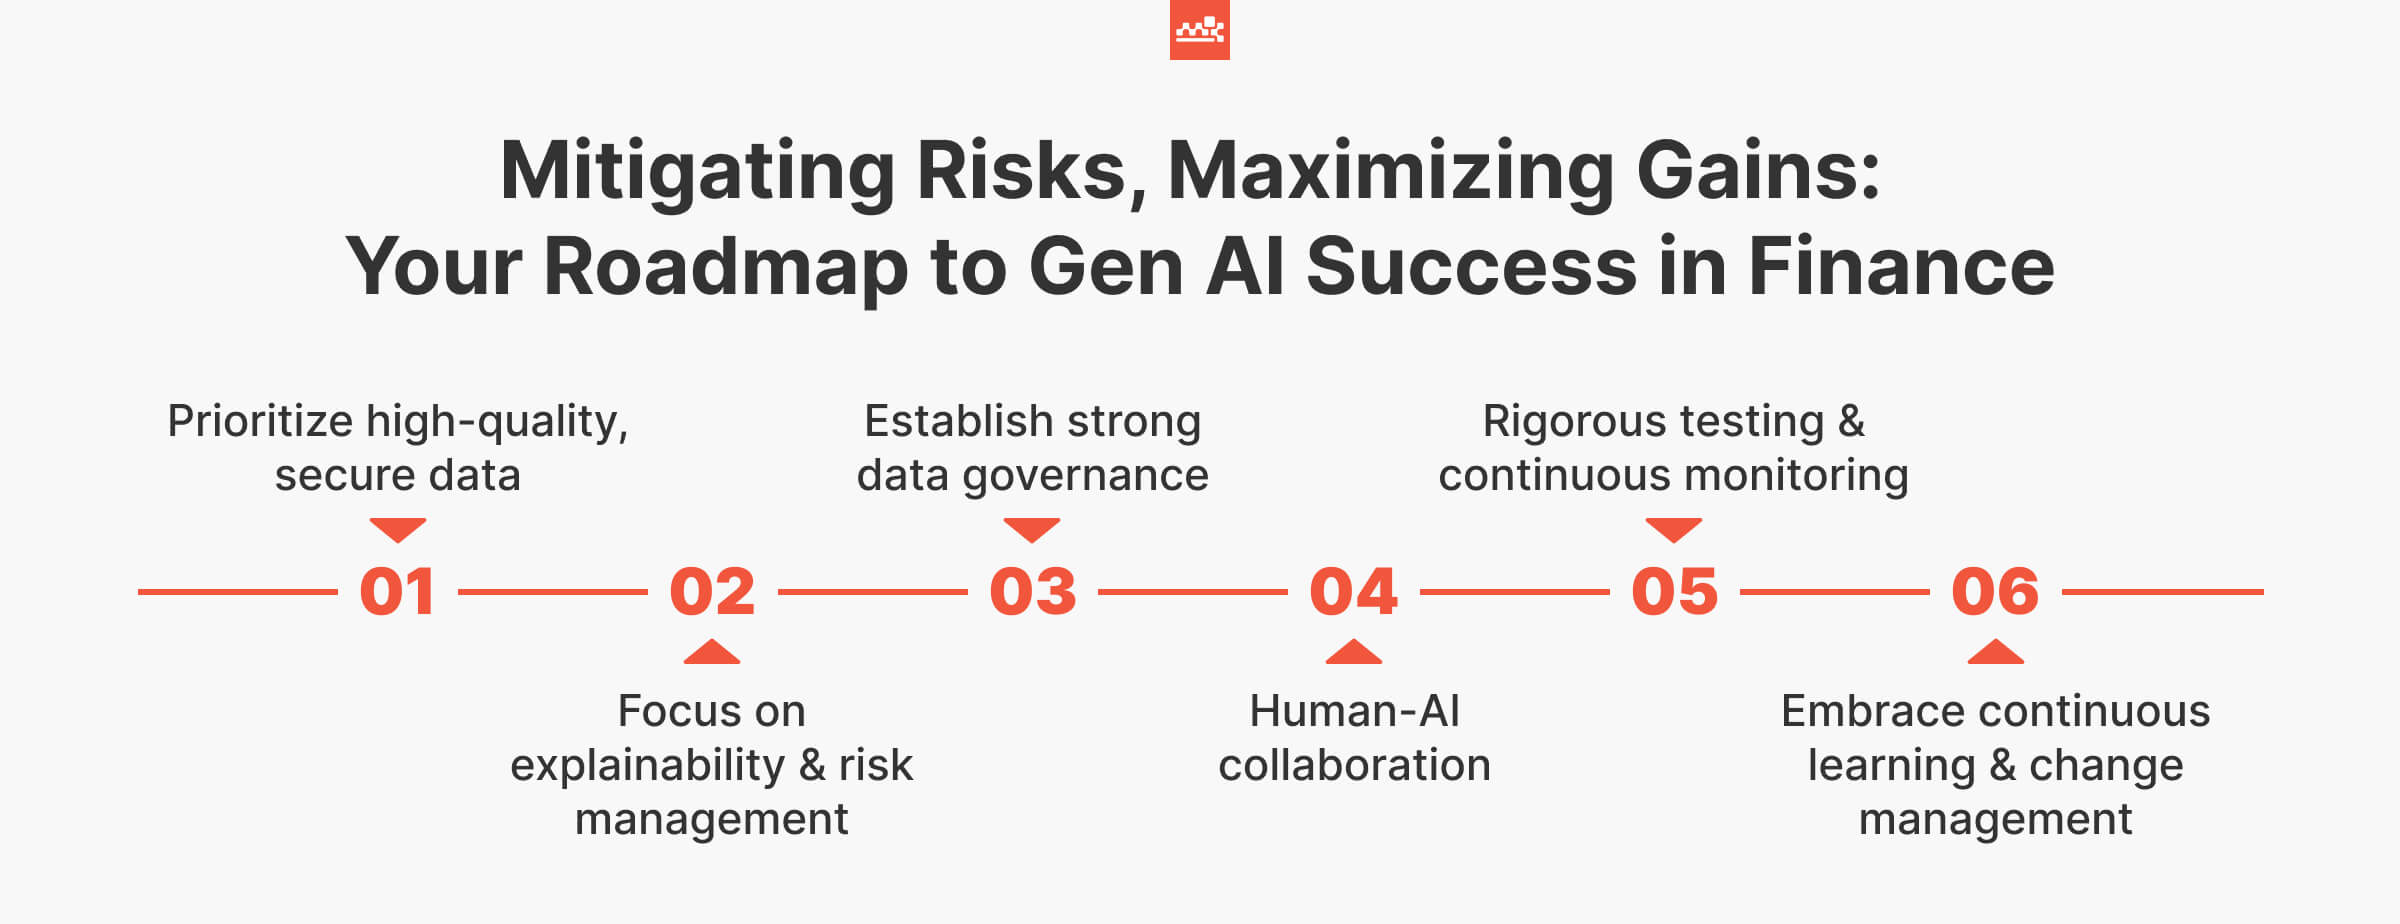 Your Roadmap to Gen AI Success in Finance